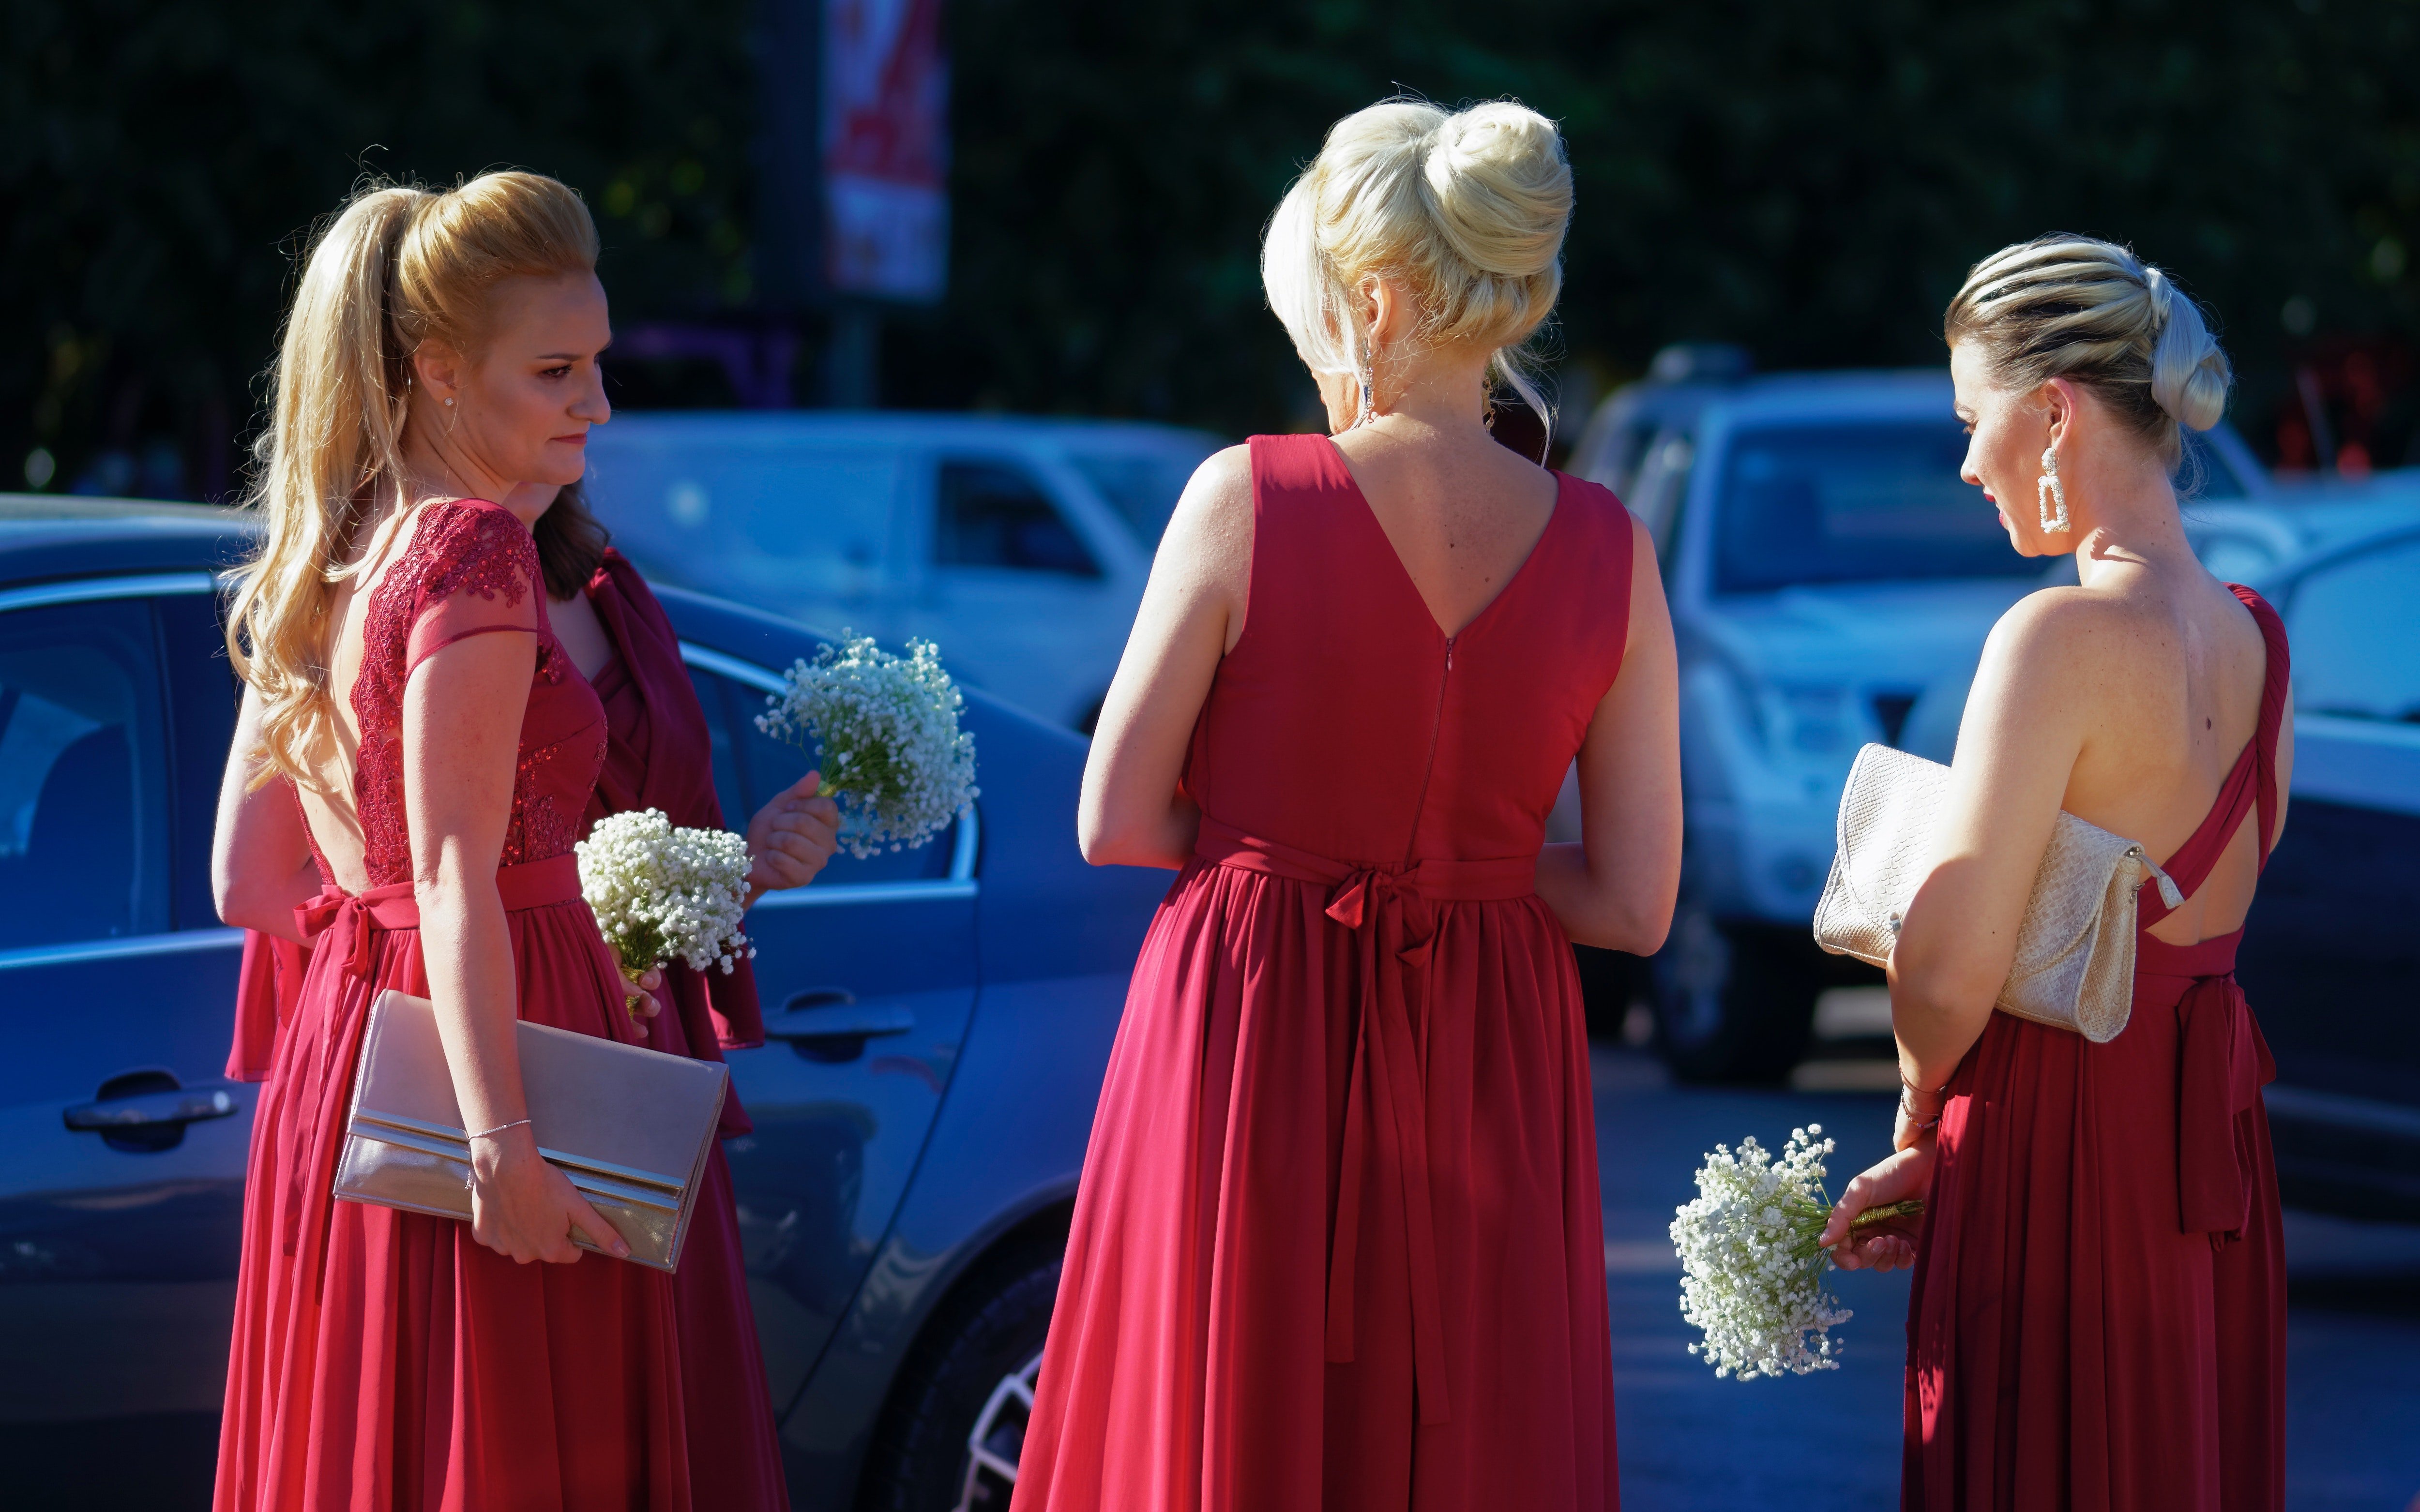 Three bridesmaids | Photo: Pexels